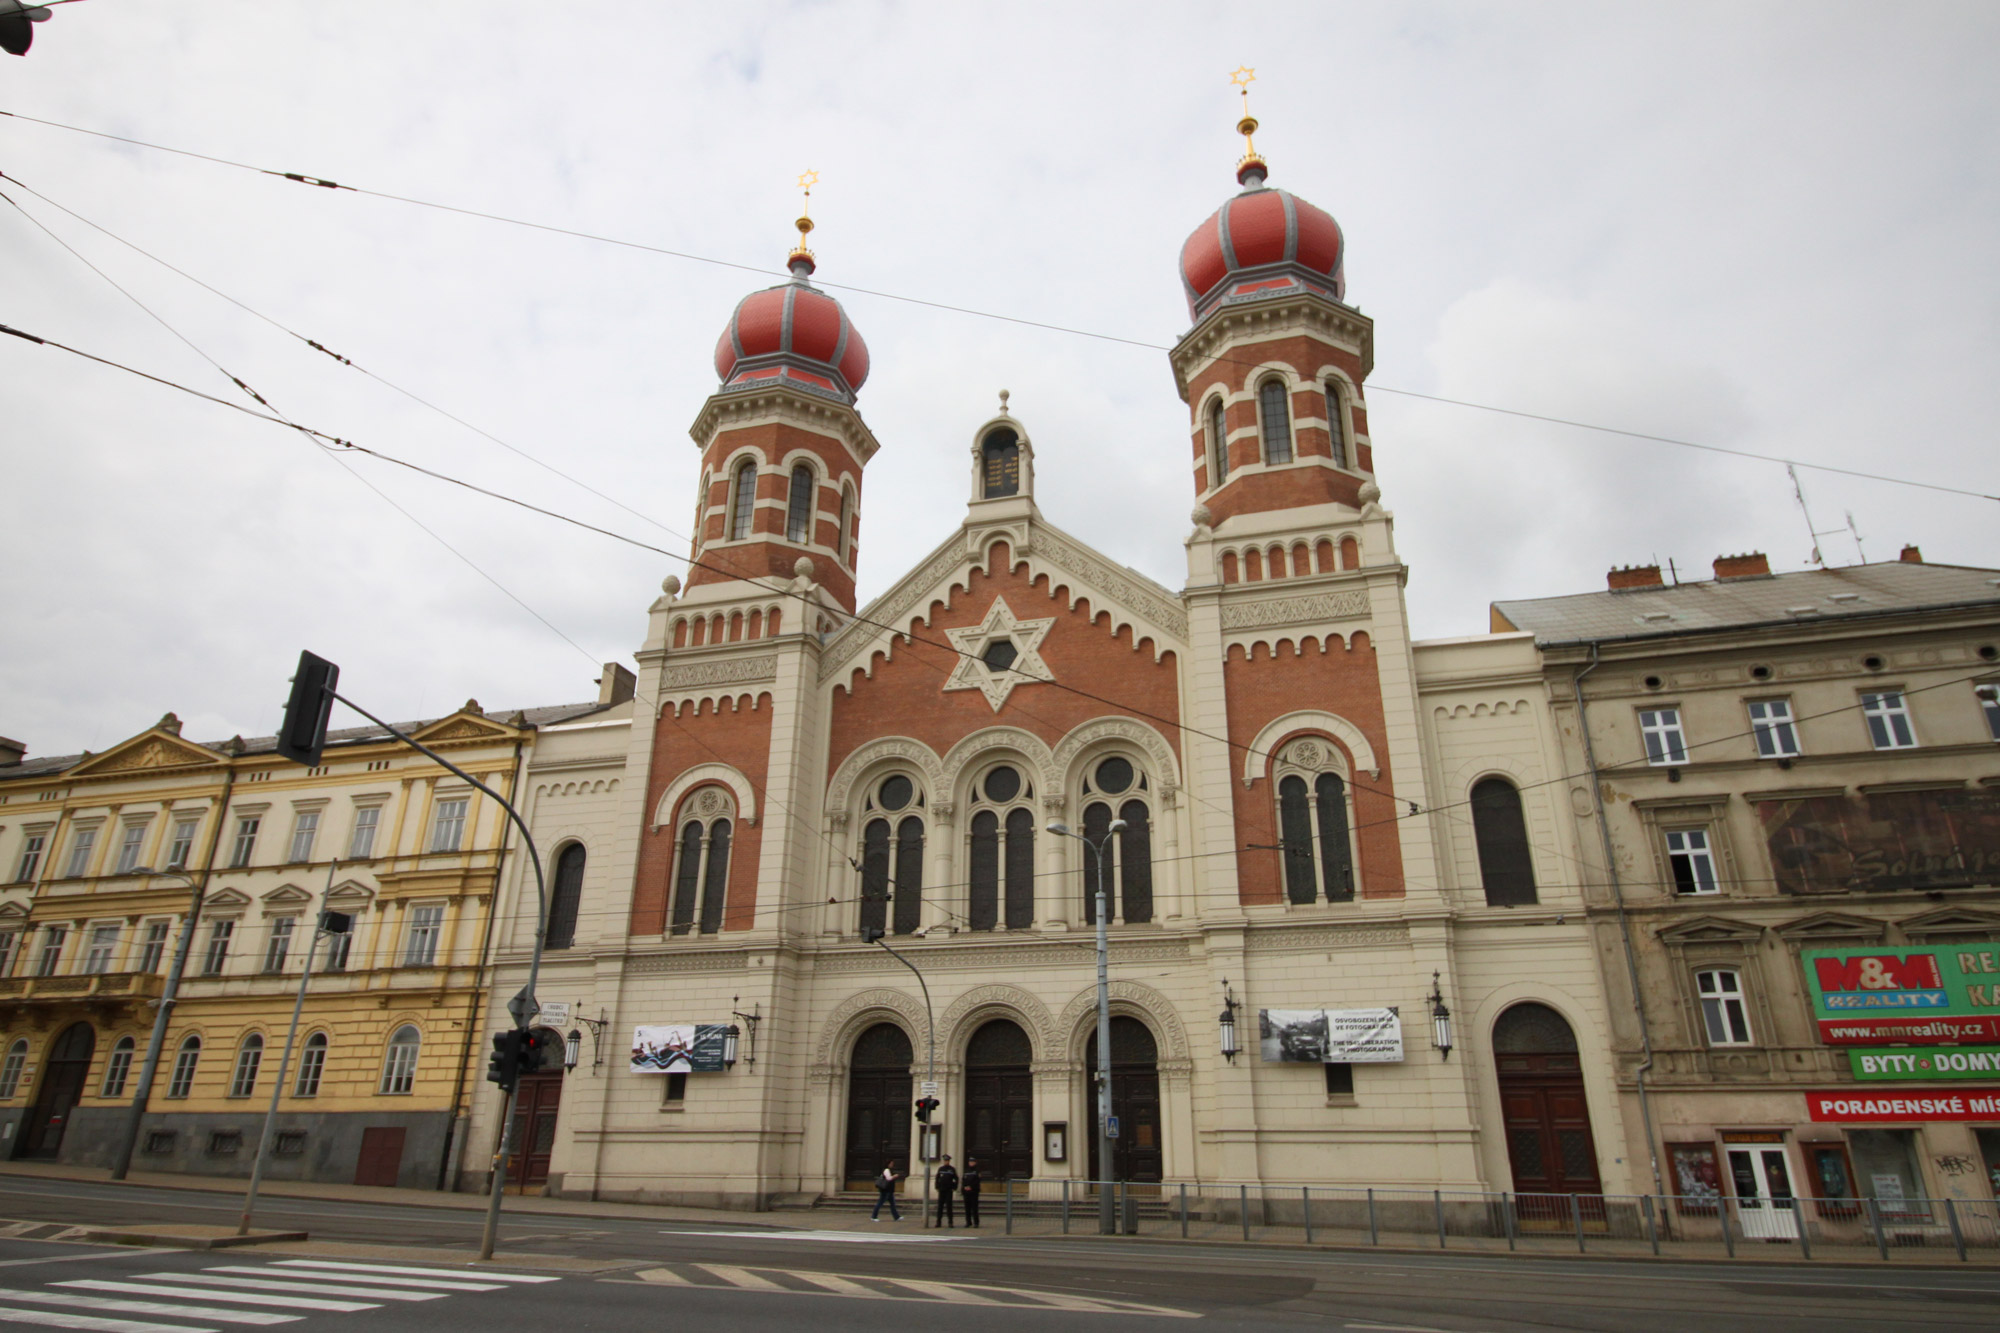 Bierpersreis Tsjechië - Pilsen - Joodse synagoge